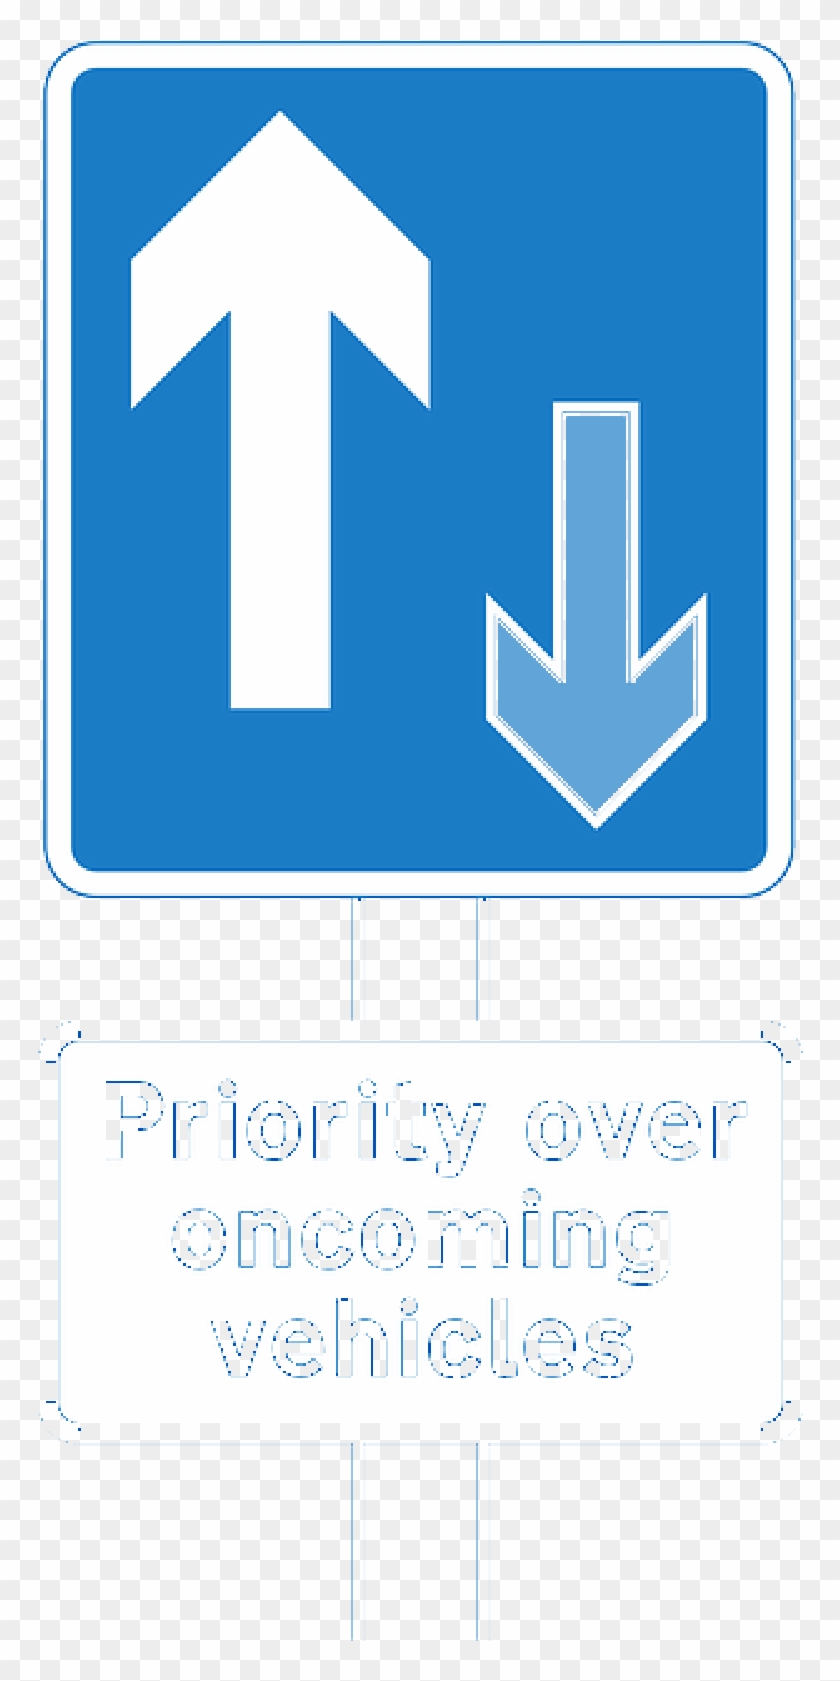 Sign, Symbol, Arrow, Road, Information, Arrows - Traffic #978020